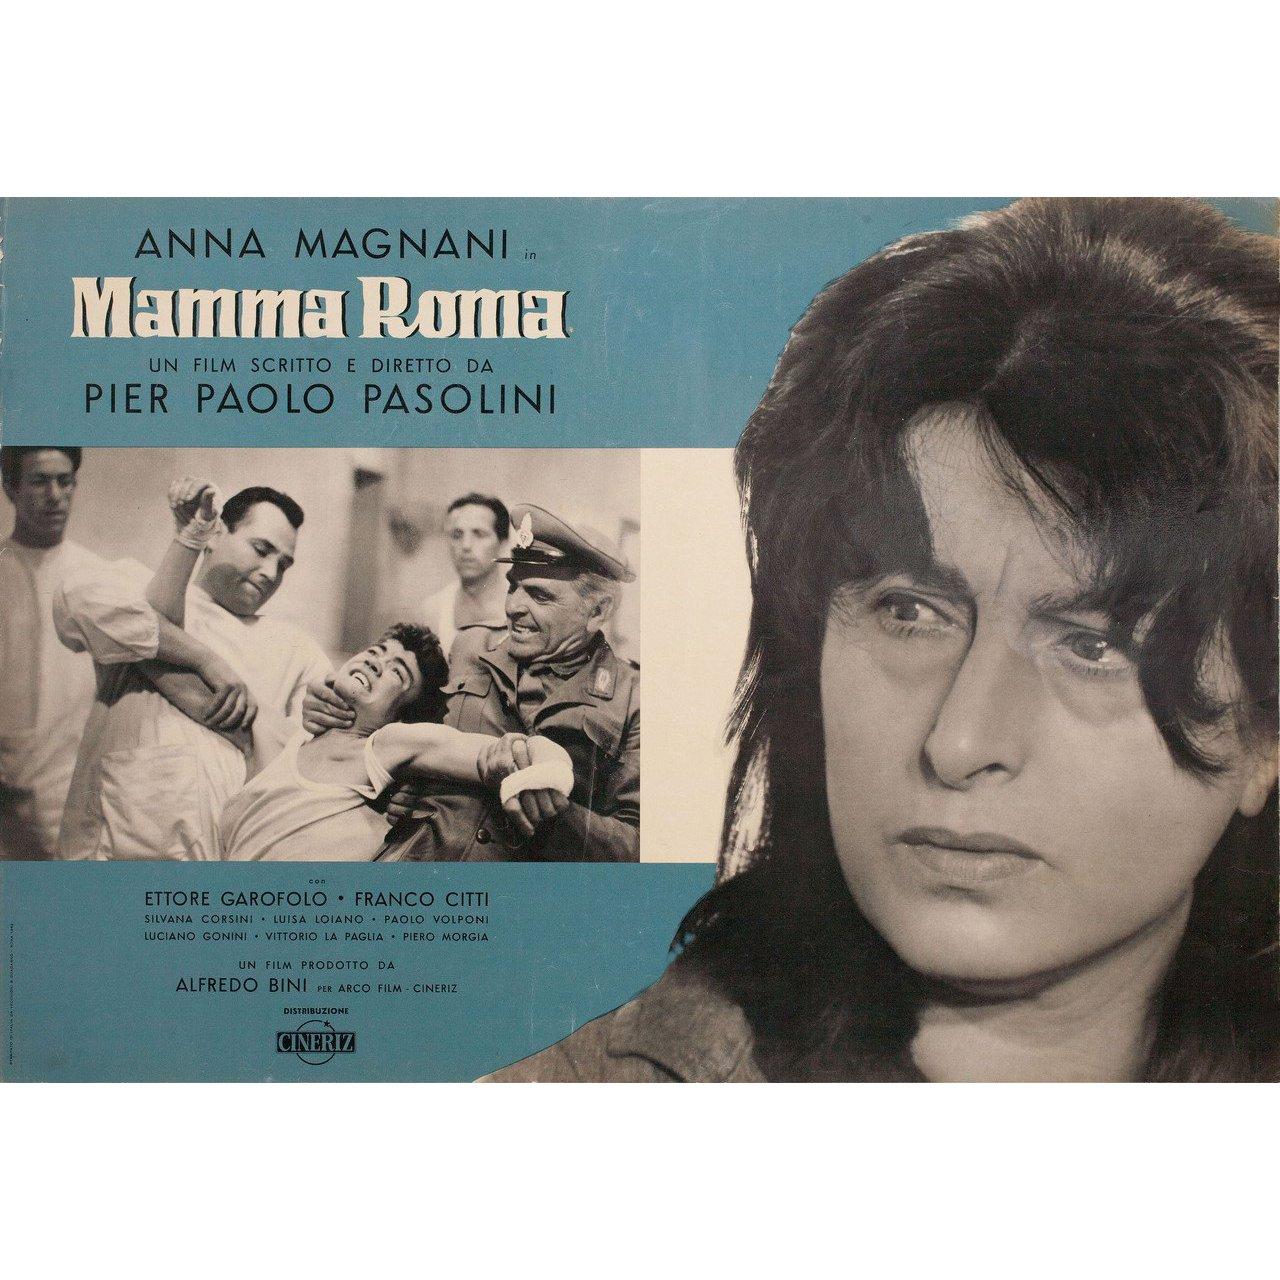 Original 1962 Italian fotobusta poster for the film 